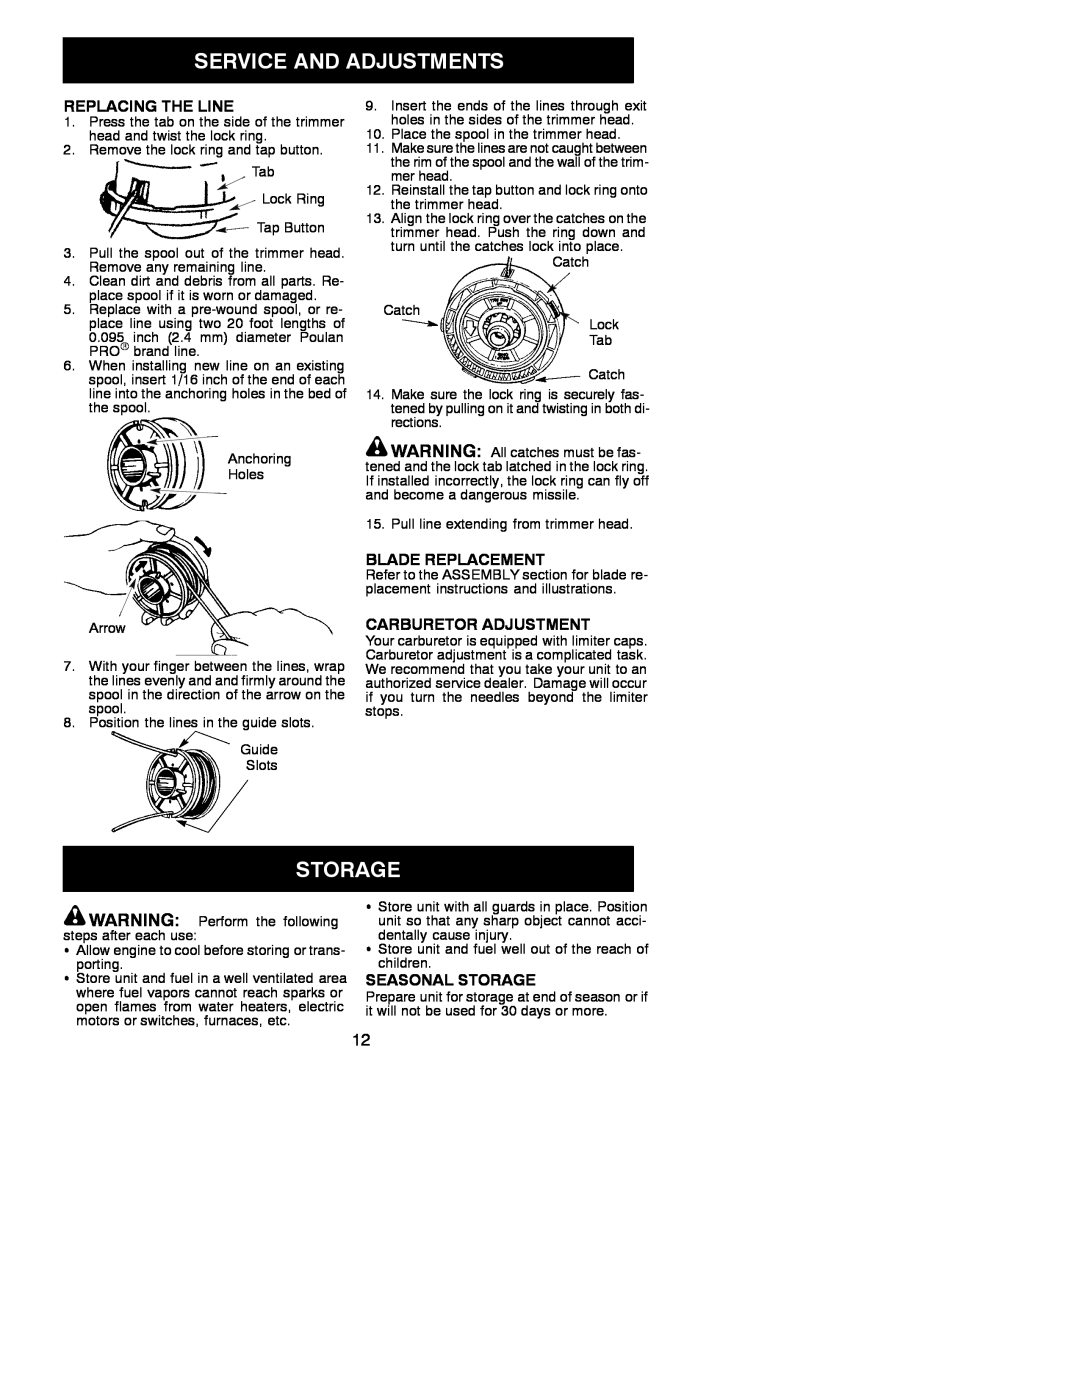 Poulan 331 instruction manual Replacing The Line, Blade Replacement, Carburetor Adjustment, Seasonal Storage 